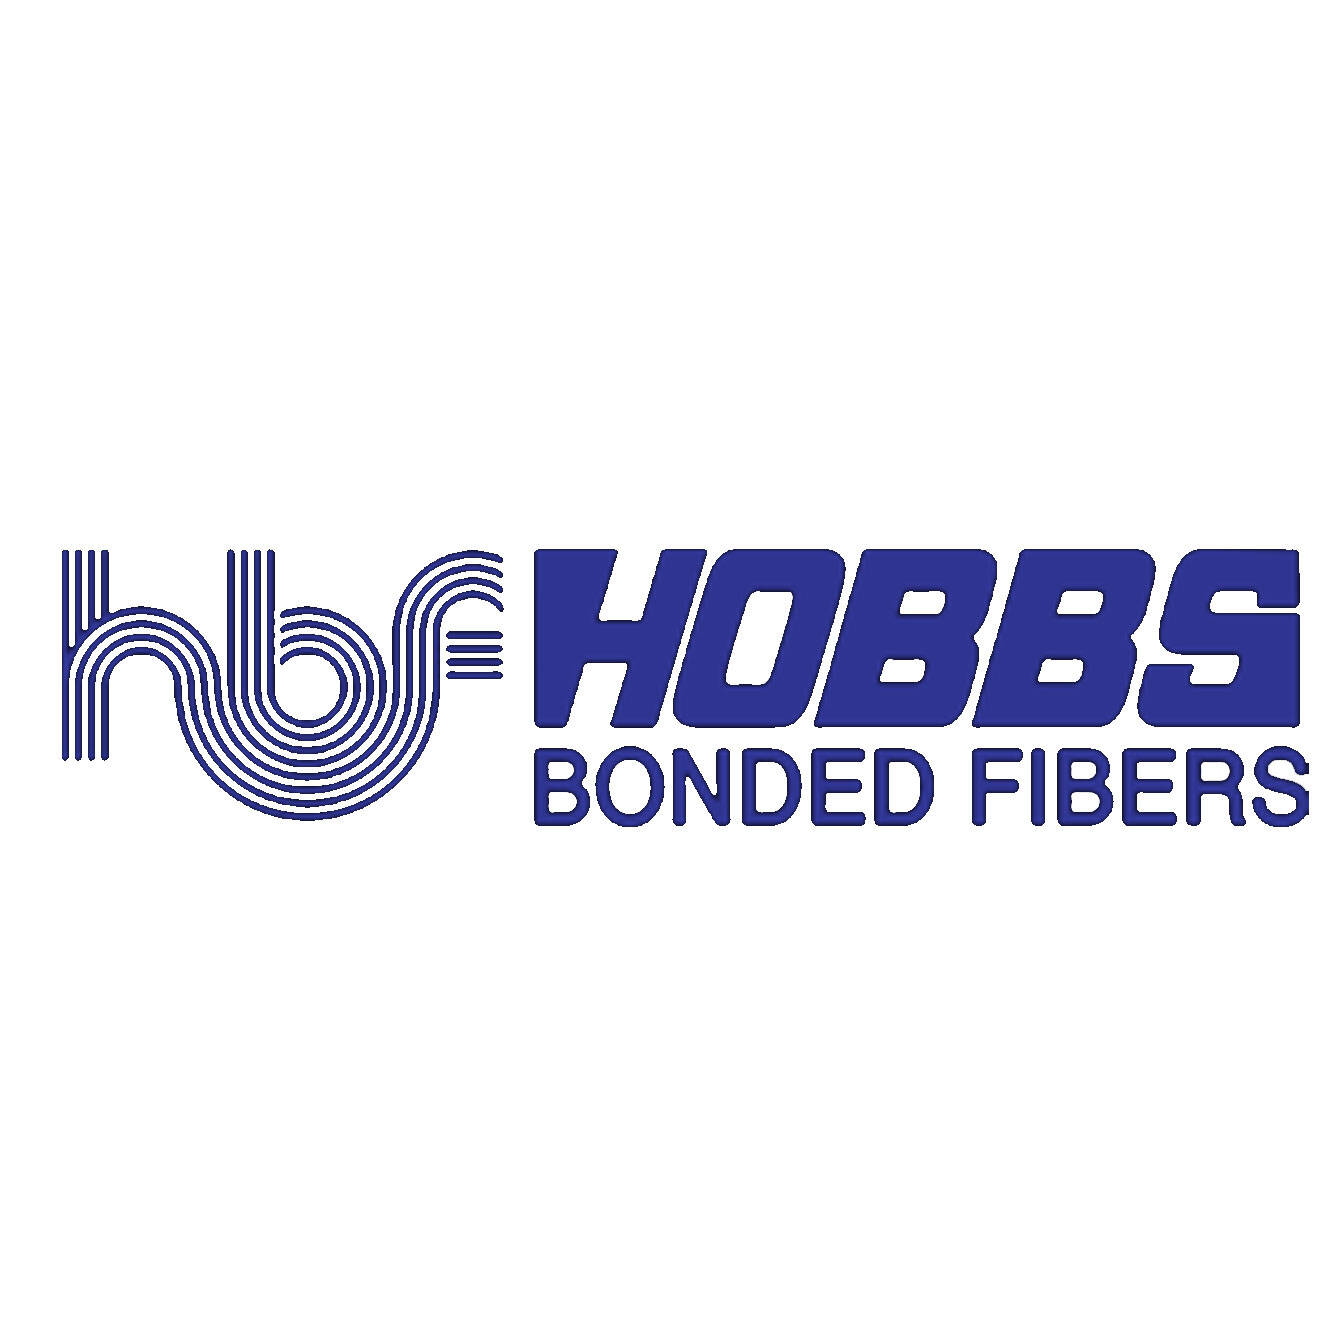 Hobbs Bonded Fibers